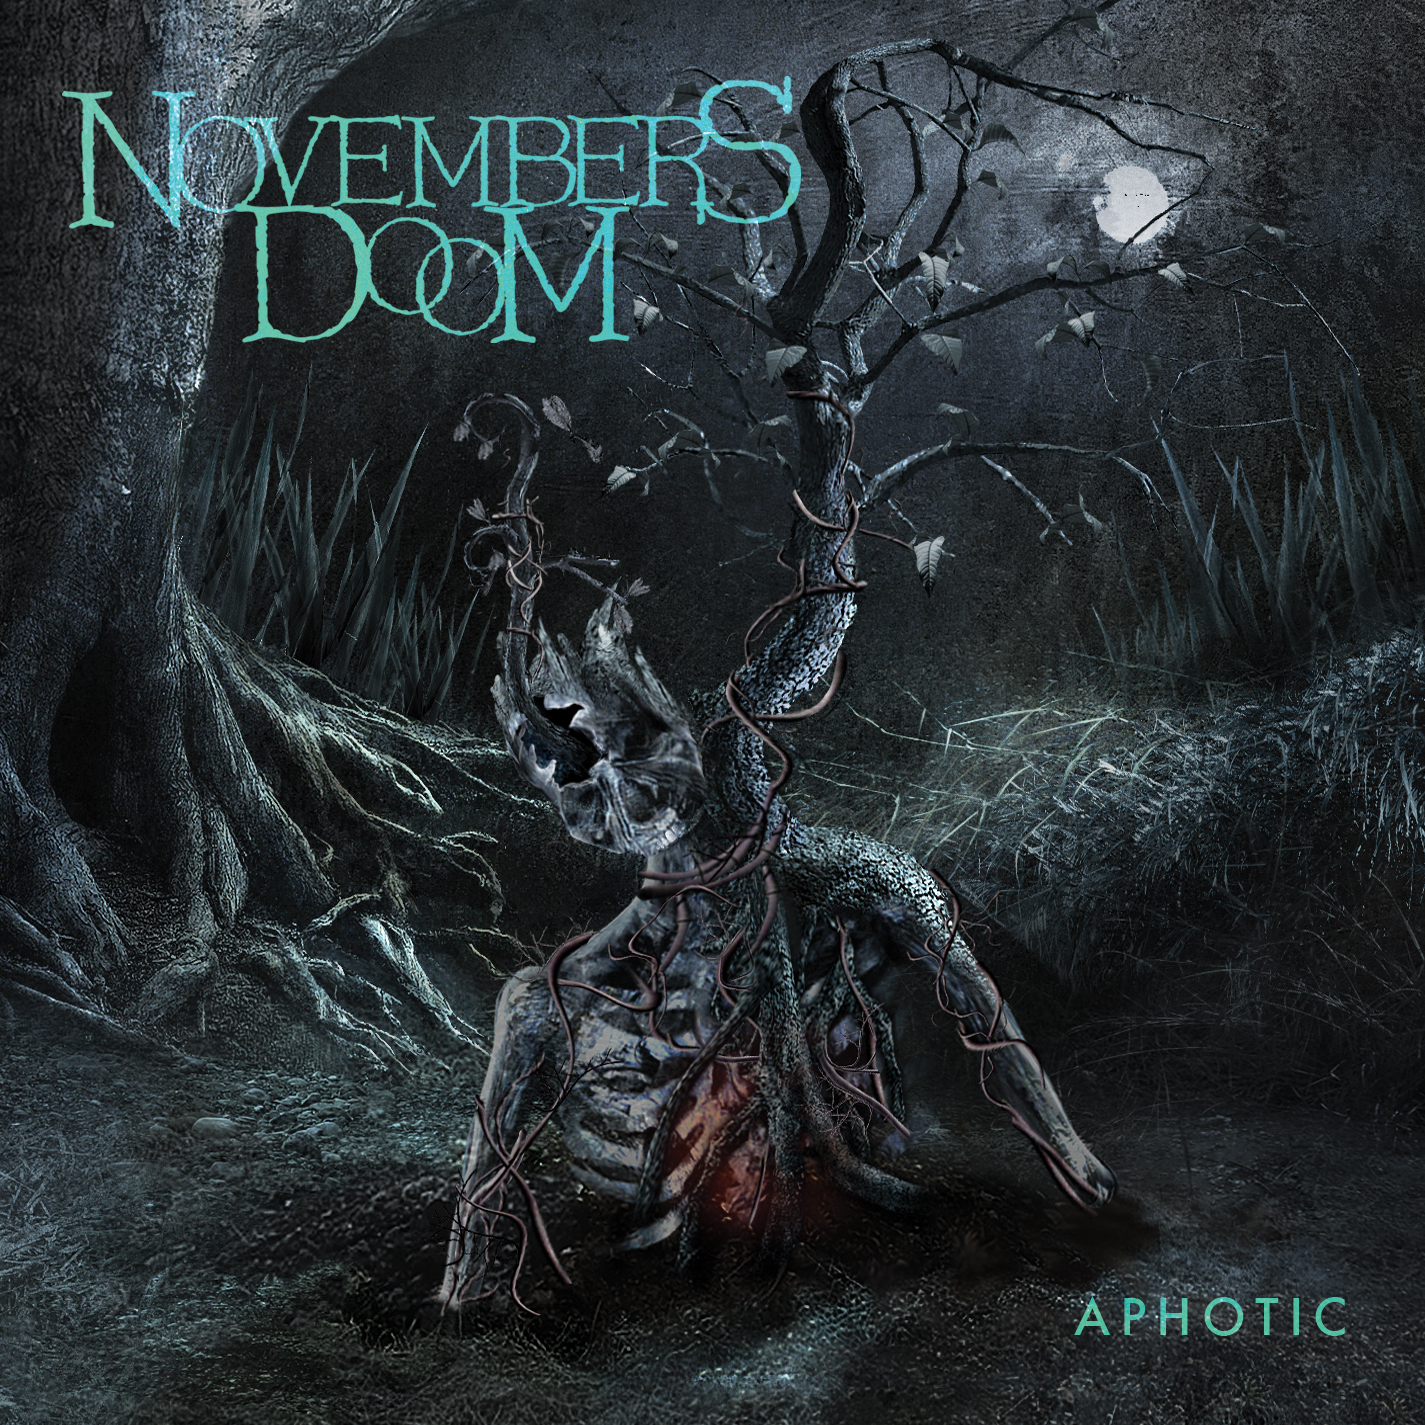 Novembers Doom #17